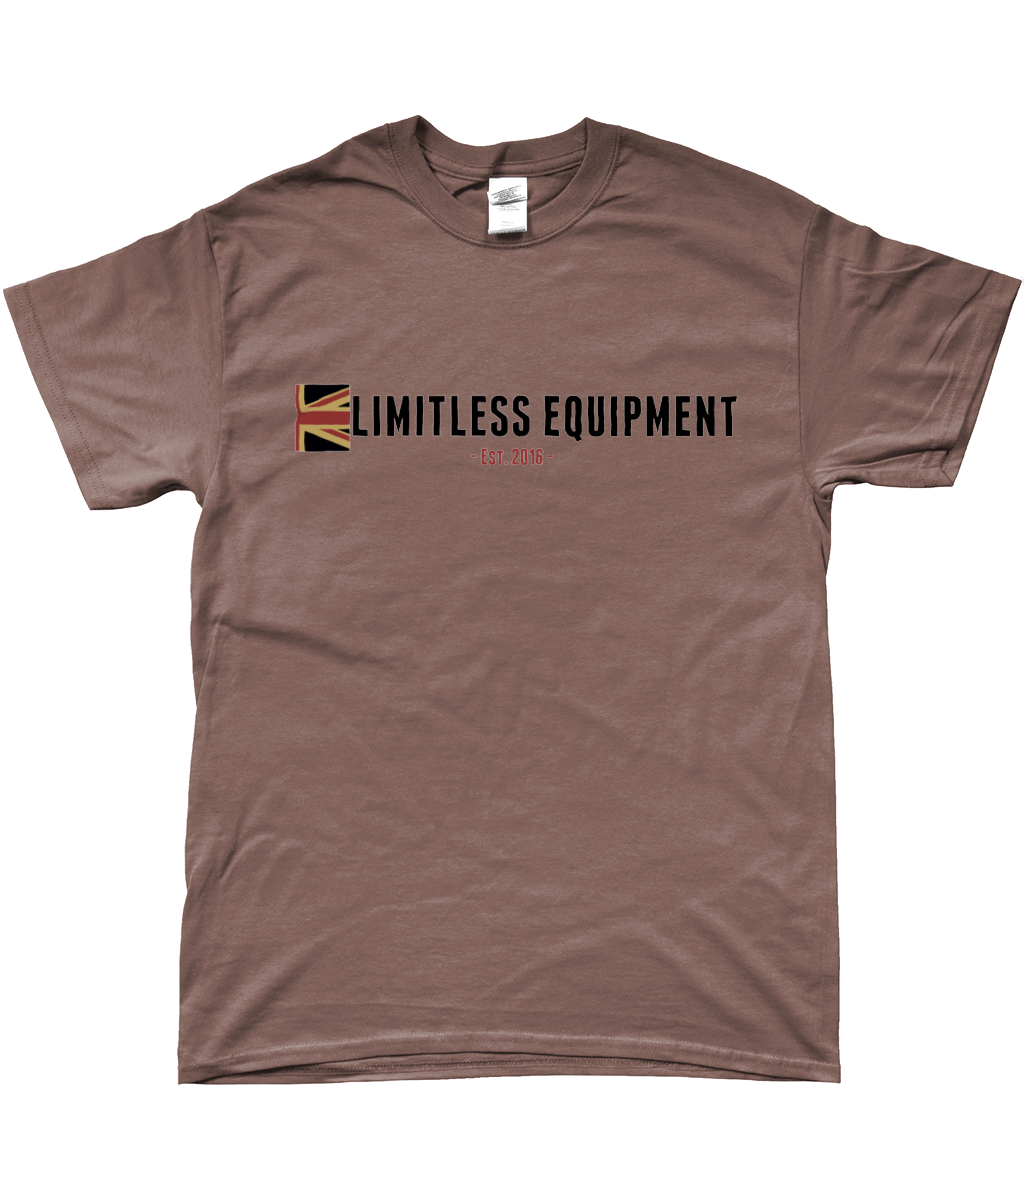 Limitless Logo Tshirt - Limitless Equipment